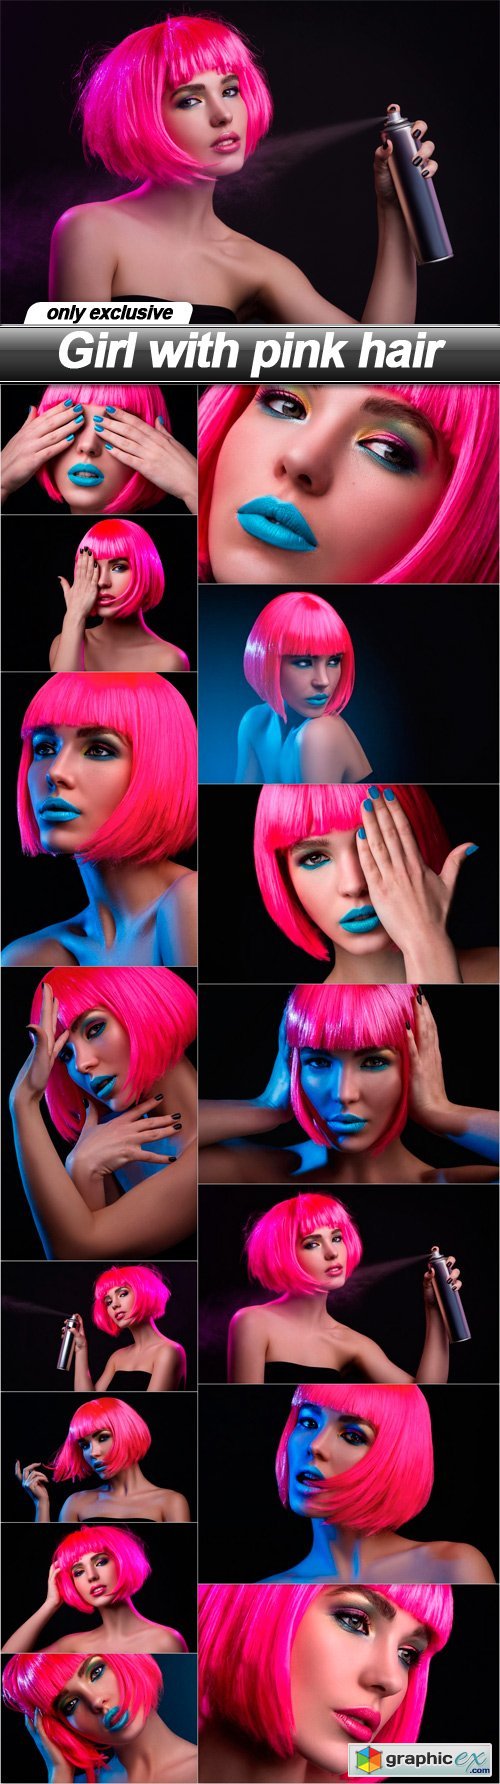 Girl with pink hair - 15 UHQ JPEG